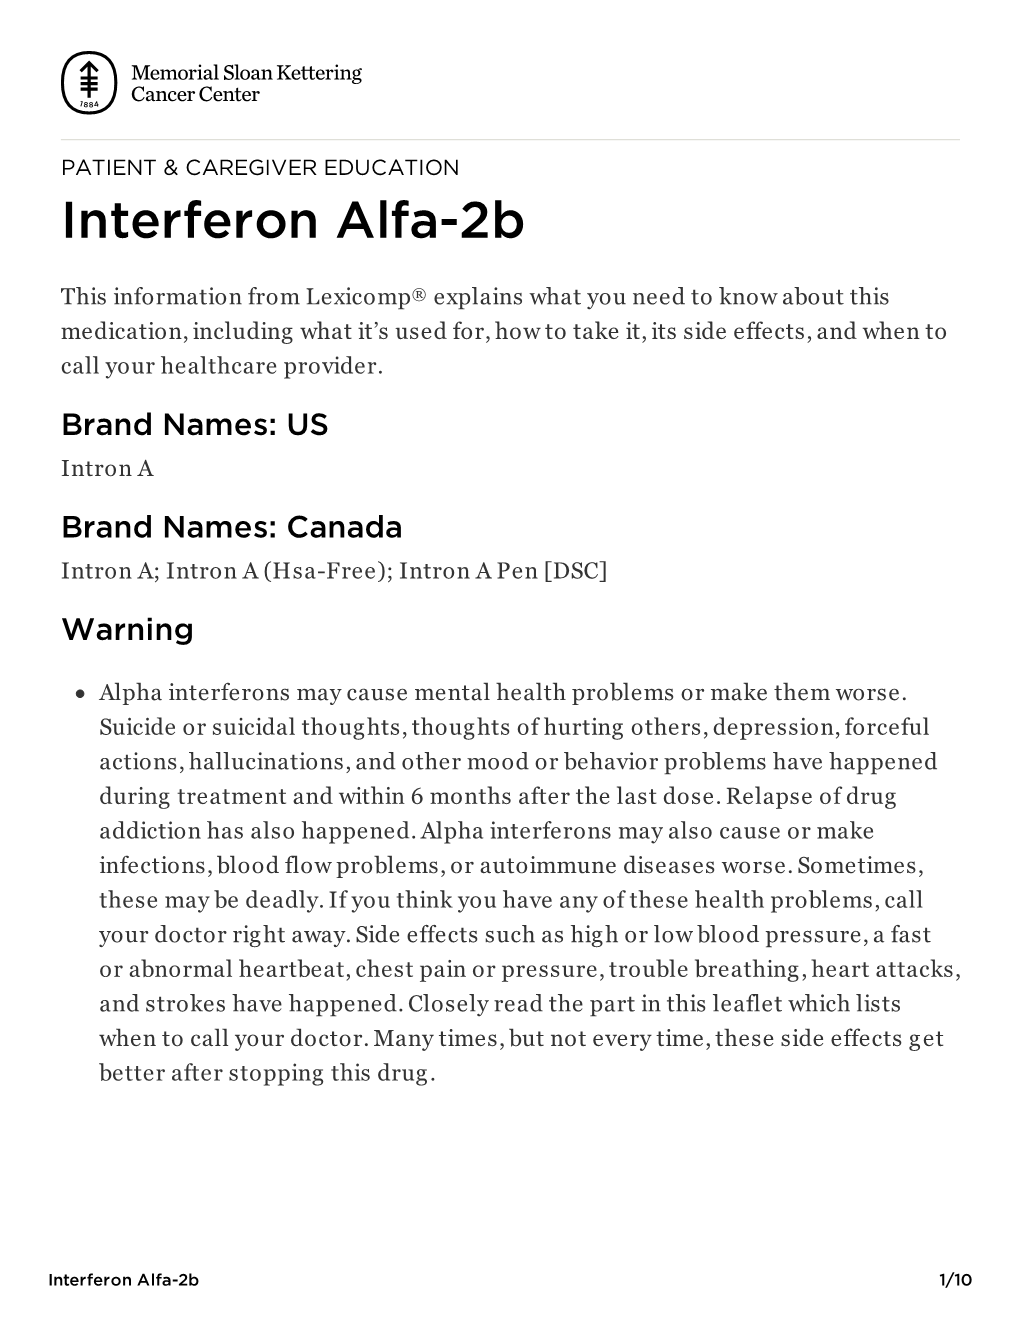 Interferon Alfa-2B | Memorial Sloan Kettering Cancer Center